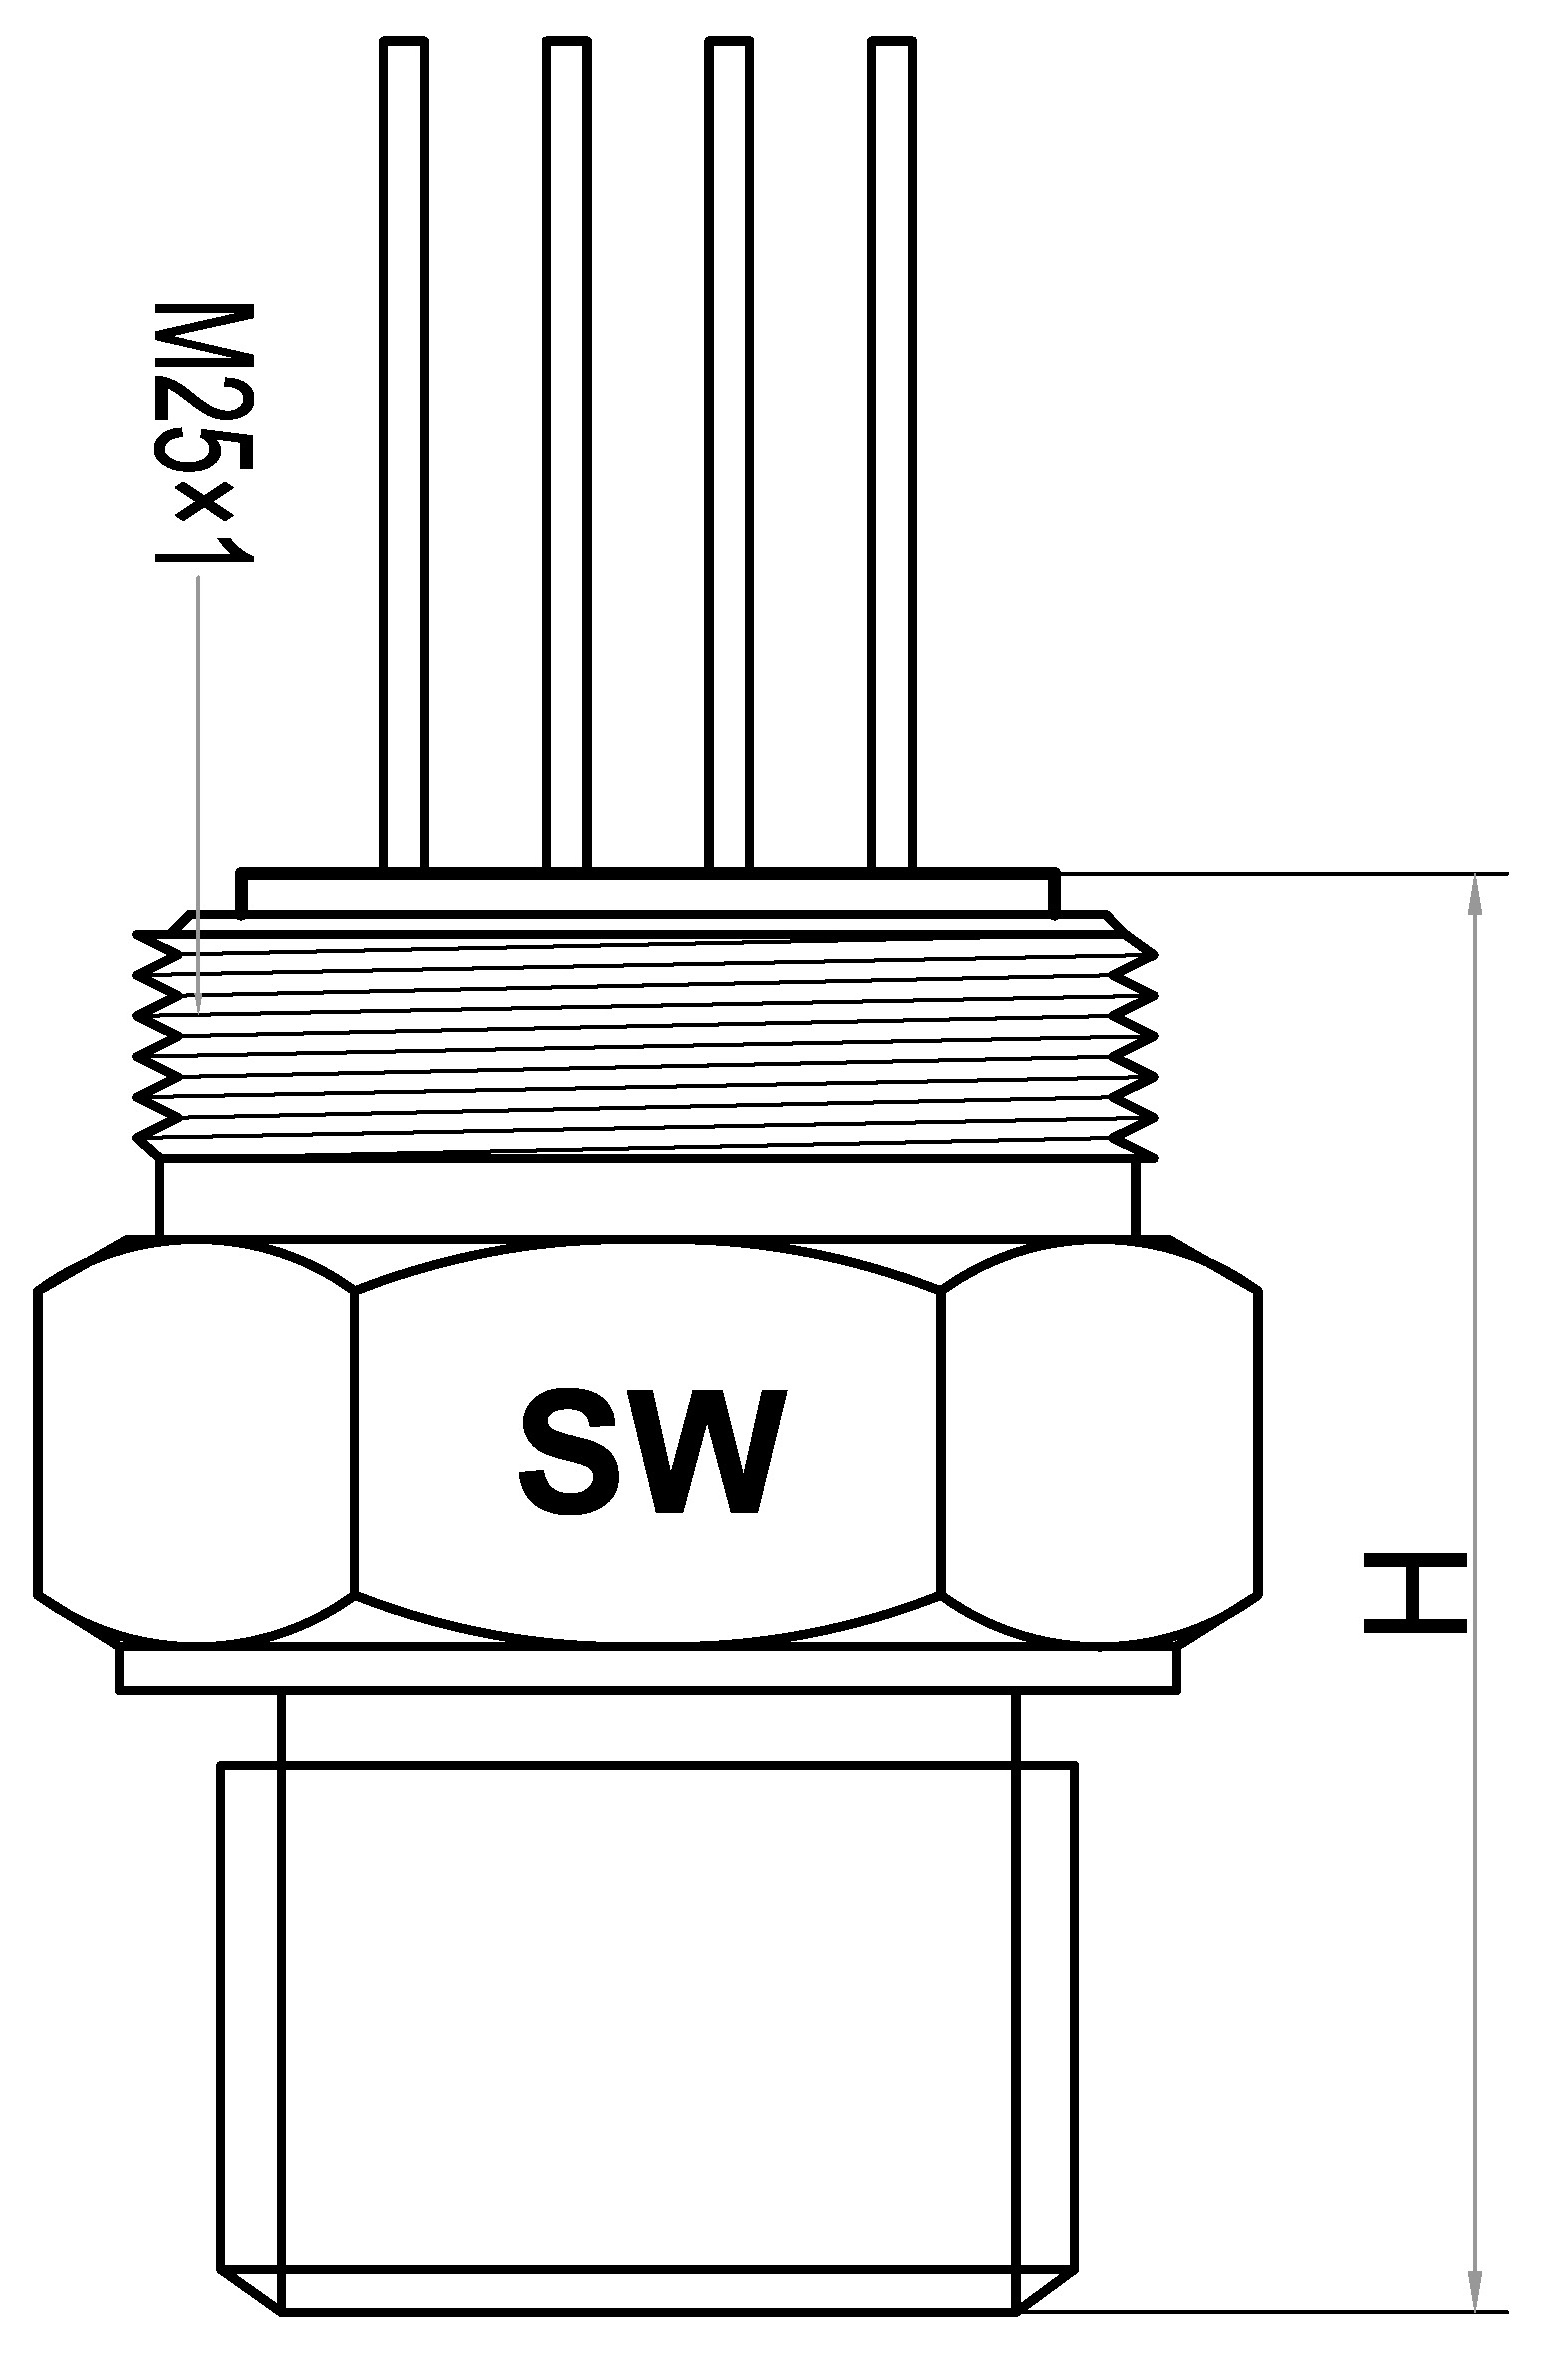 SS114 series Flush diaphragm pressure transducer